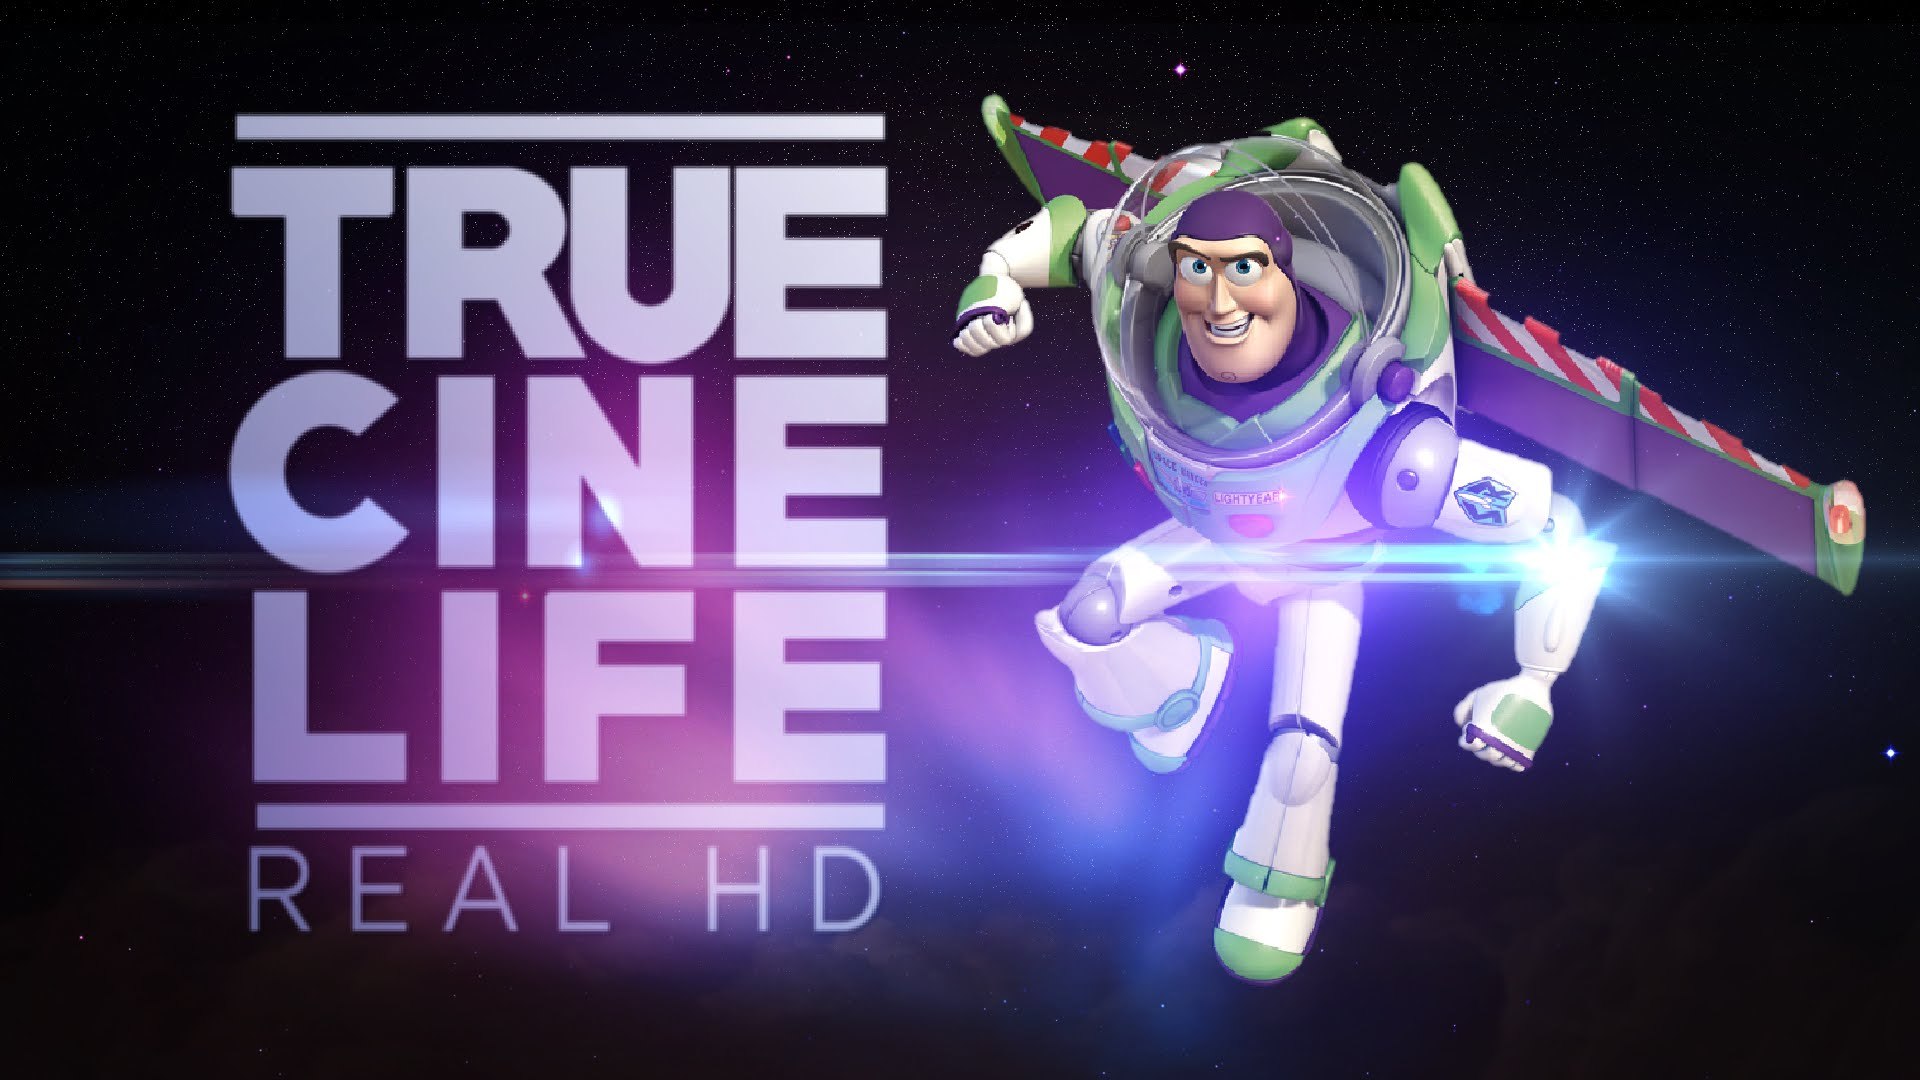 TRUE CINE LIFE HD (Film d'Animation)